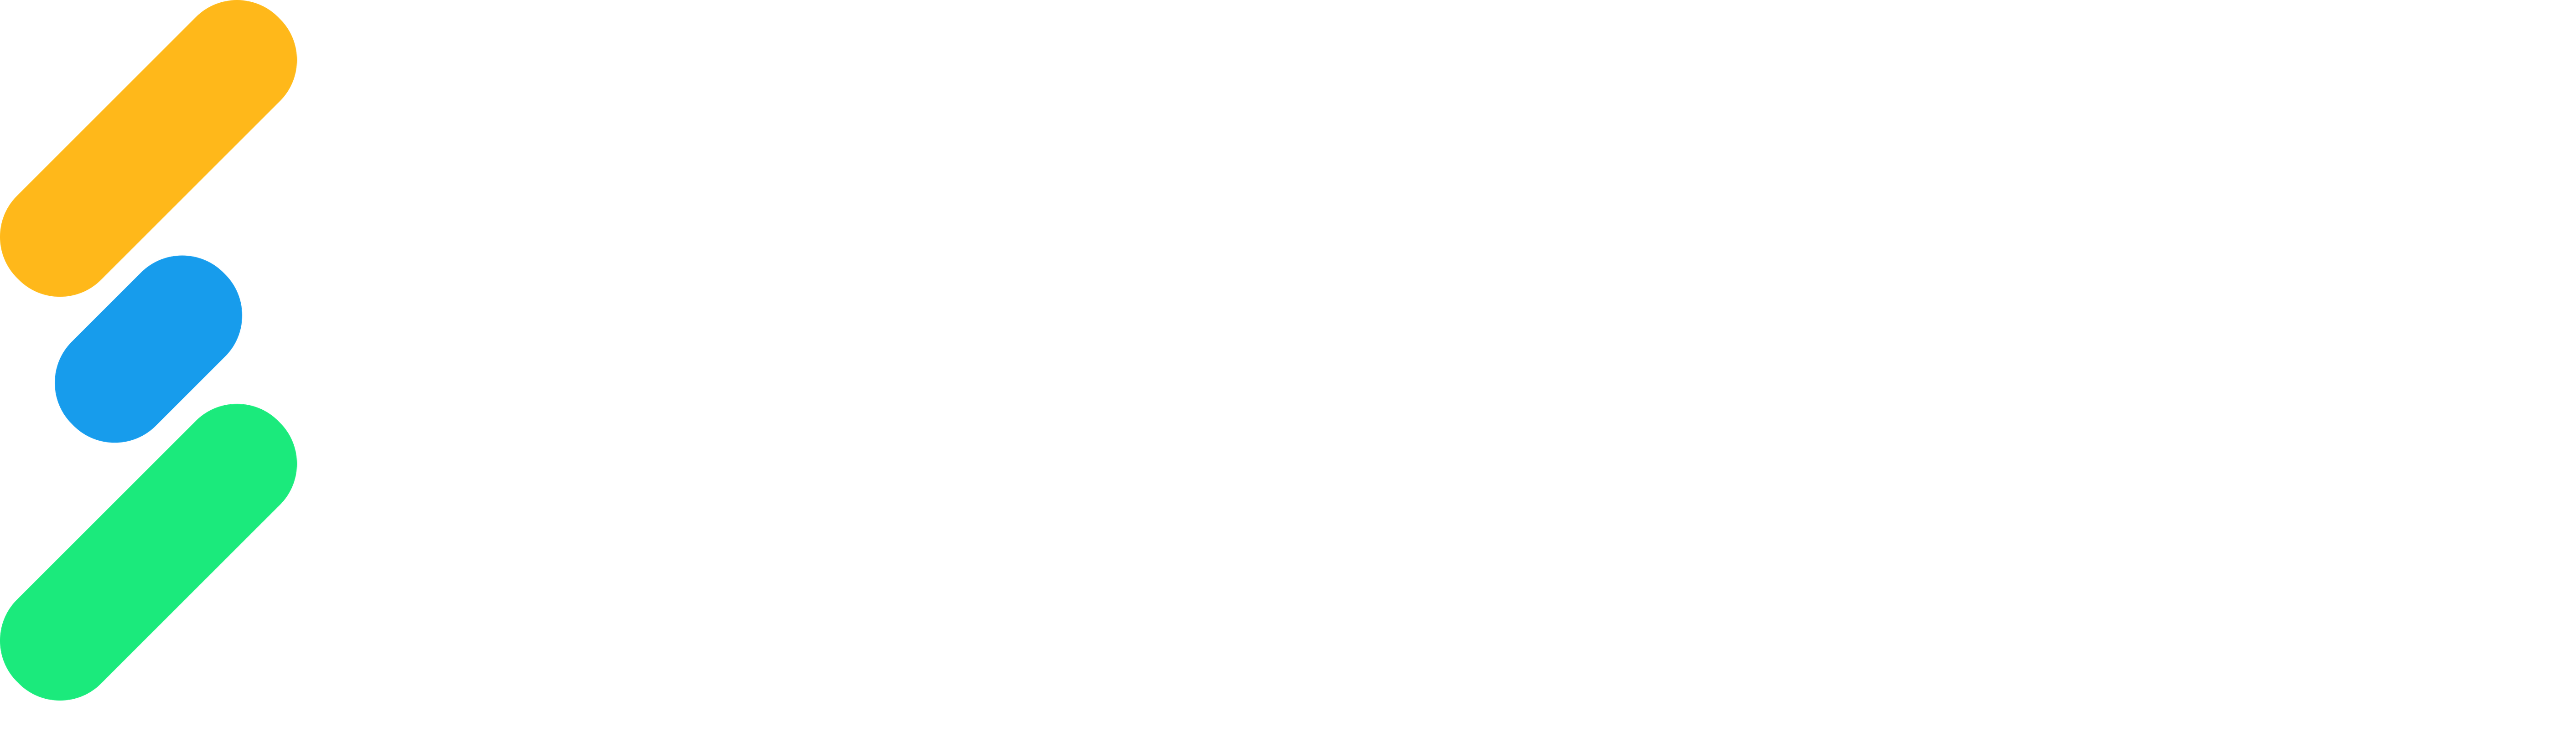 Splits.io logo with text